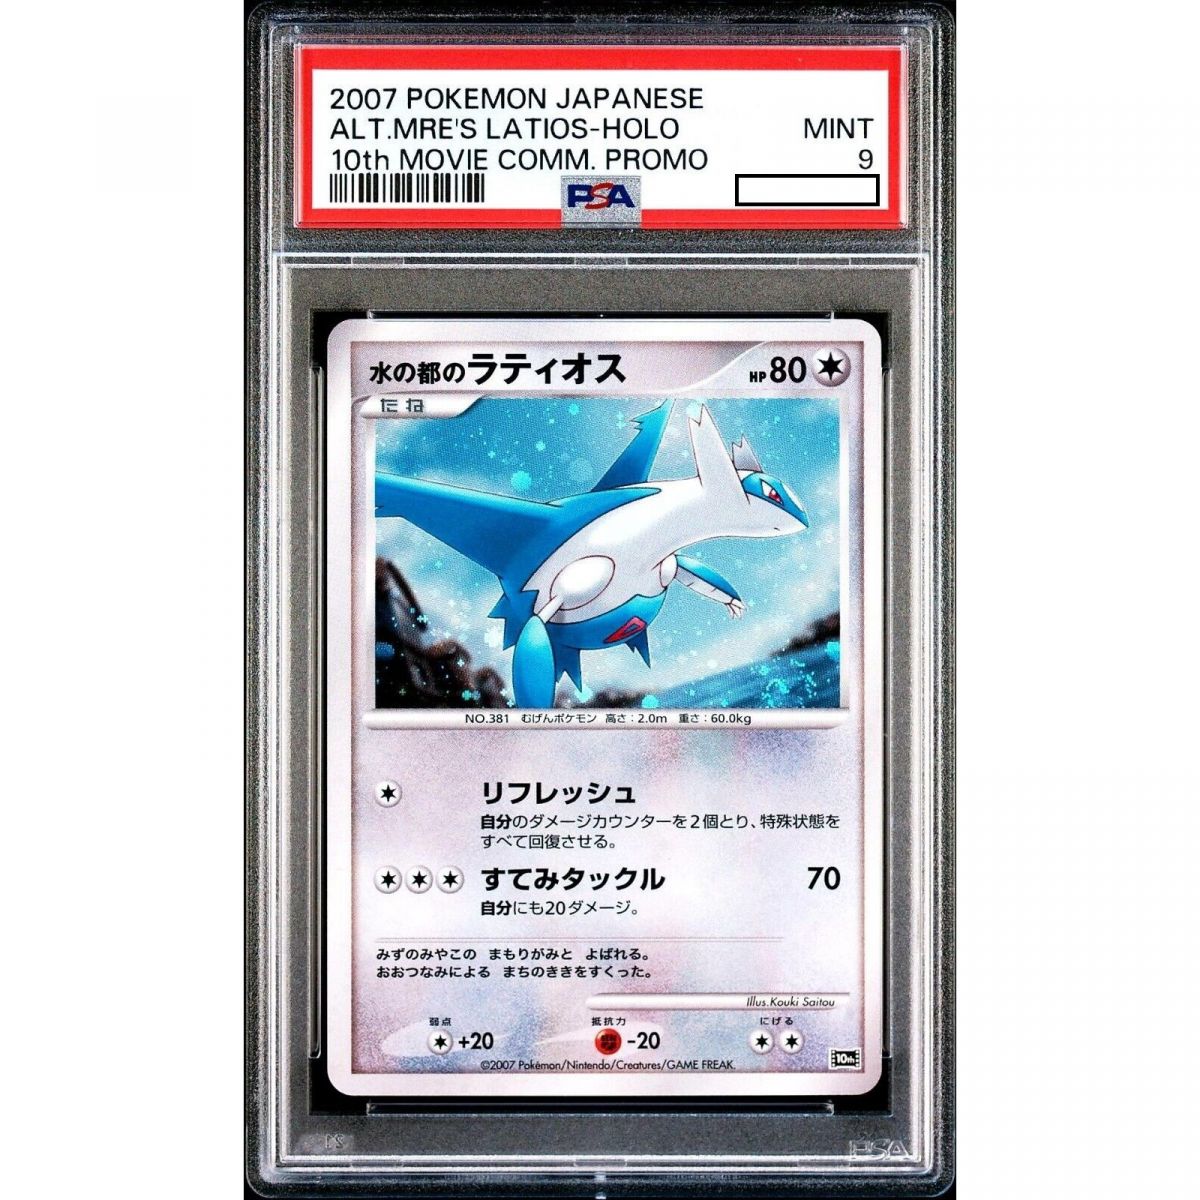 Pokémon - Graded Card - Latios 10th Movie Anniversary 2007 Holo Rare Japanese [PSA 9 - Mint]